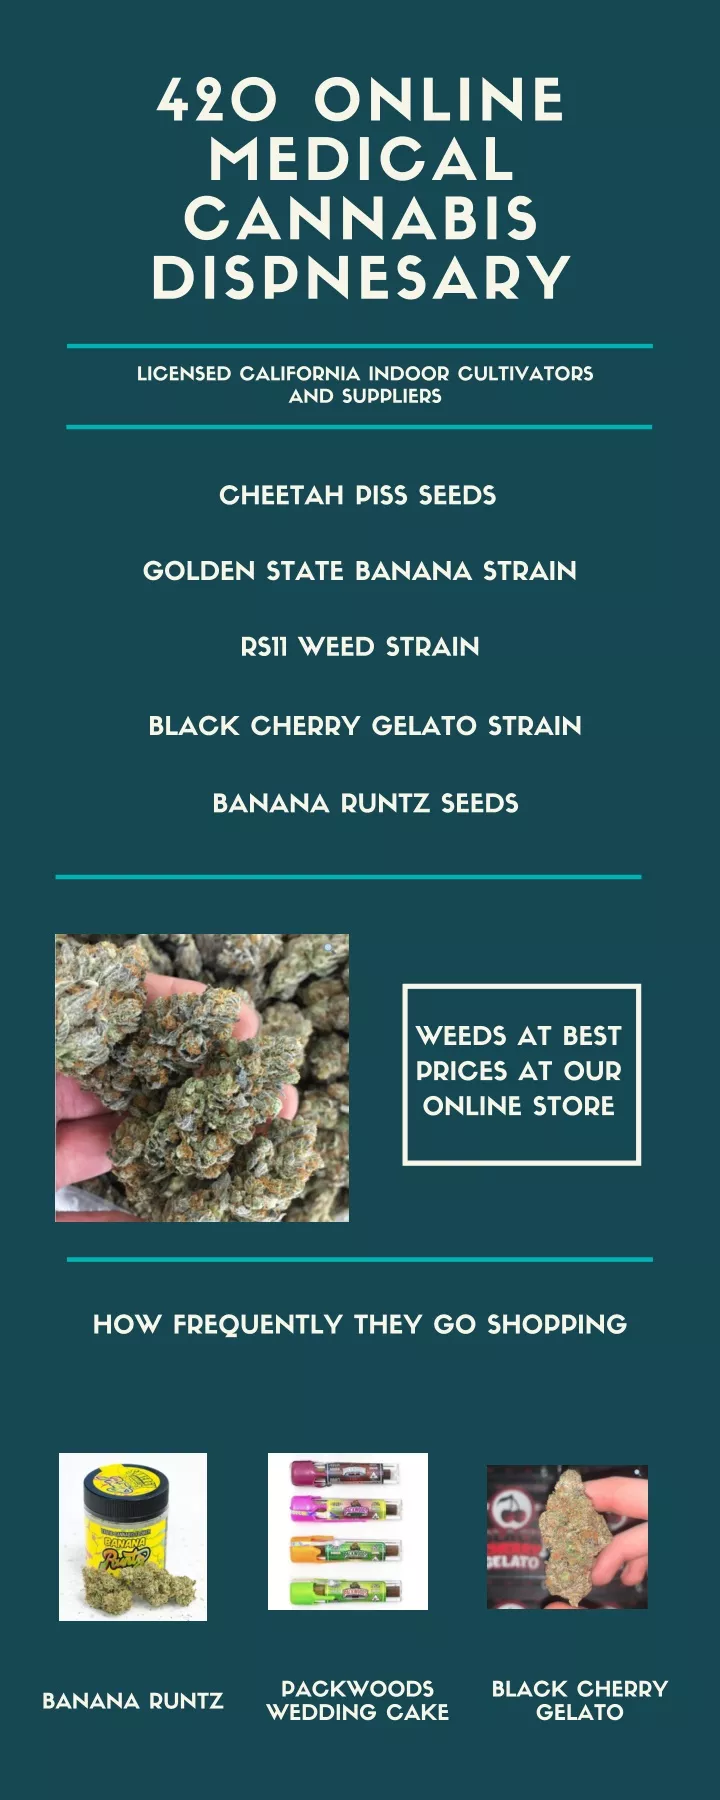 420 online medical cannabis dispnesary